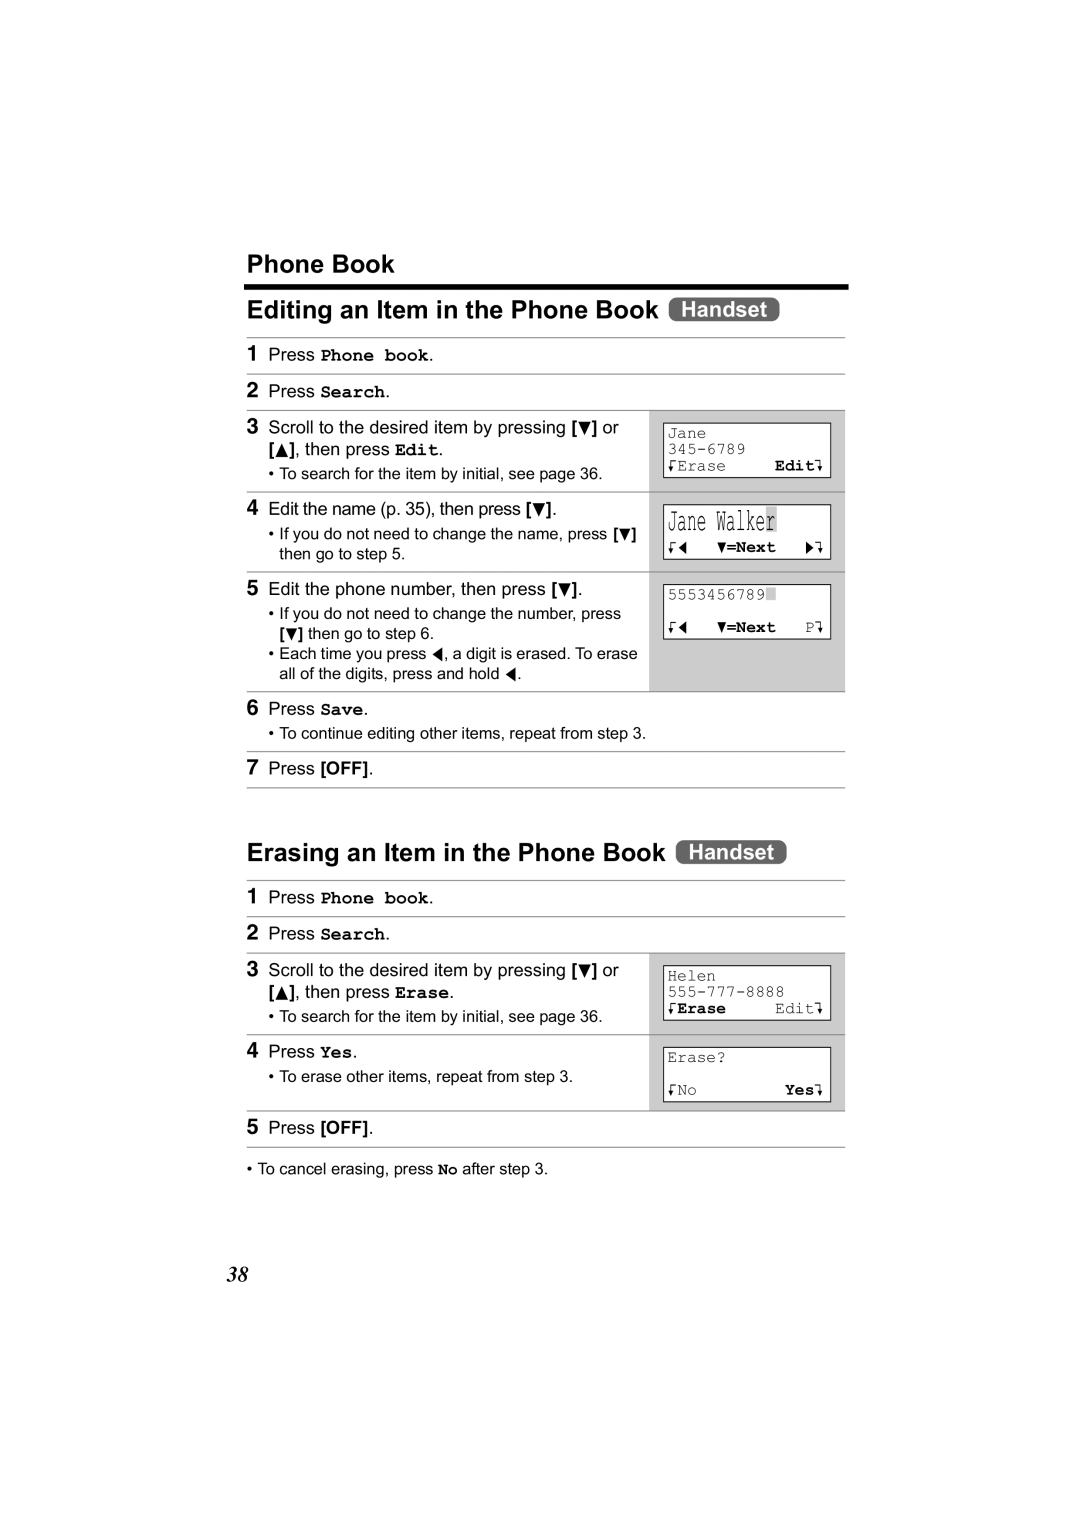 Panasonic KX-TG2344 manual Phone Book Editing an Item in the Phone Book Handset, Erasing an Item in the Phone Book Handset 